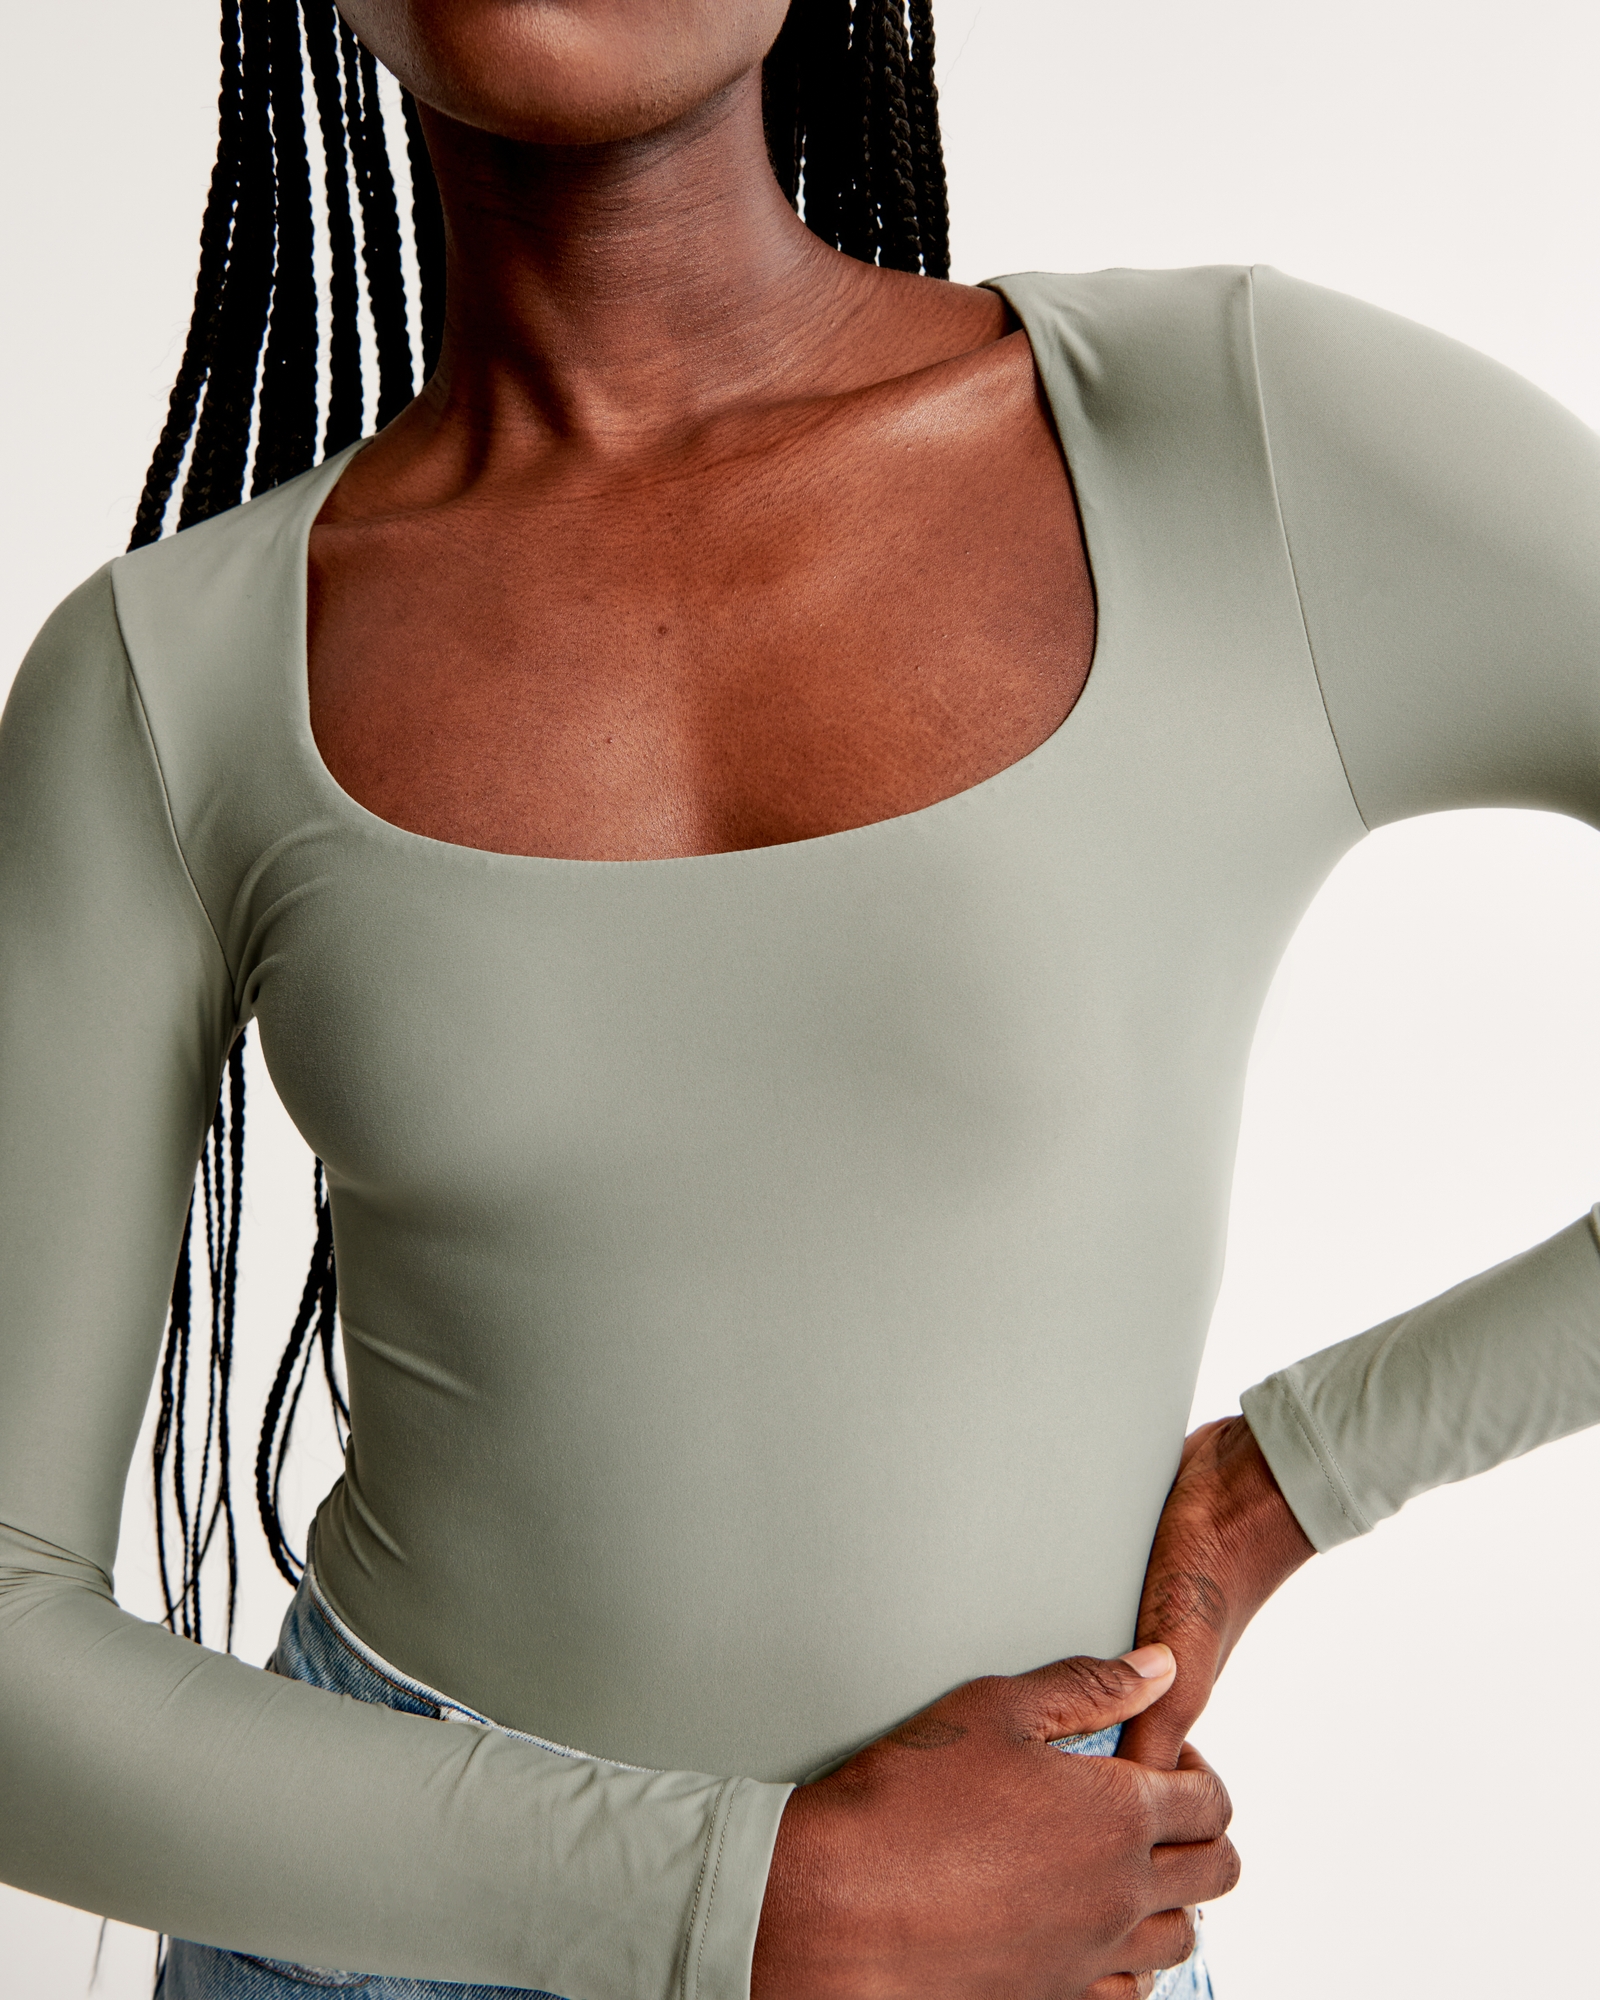 Women's Soft Matte Seamless Long-Sleeve Crew Bodysuit, Women's Sale